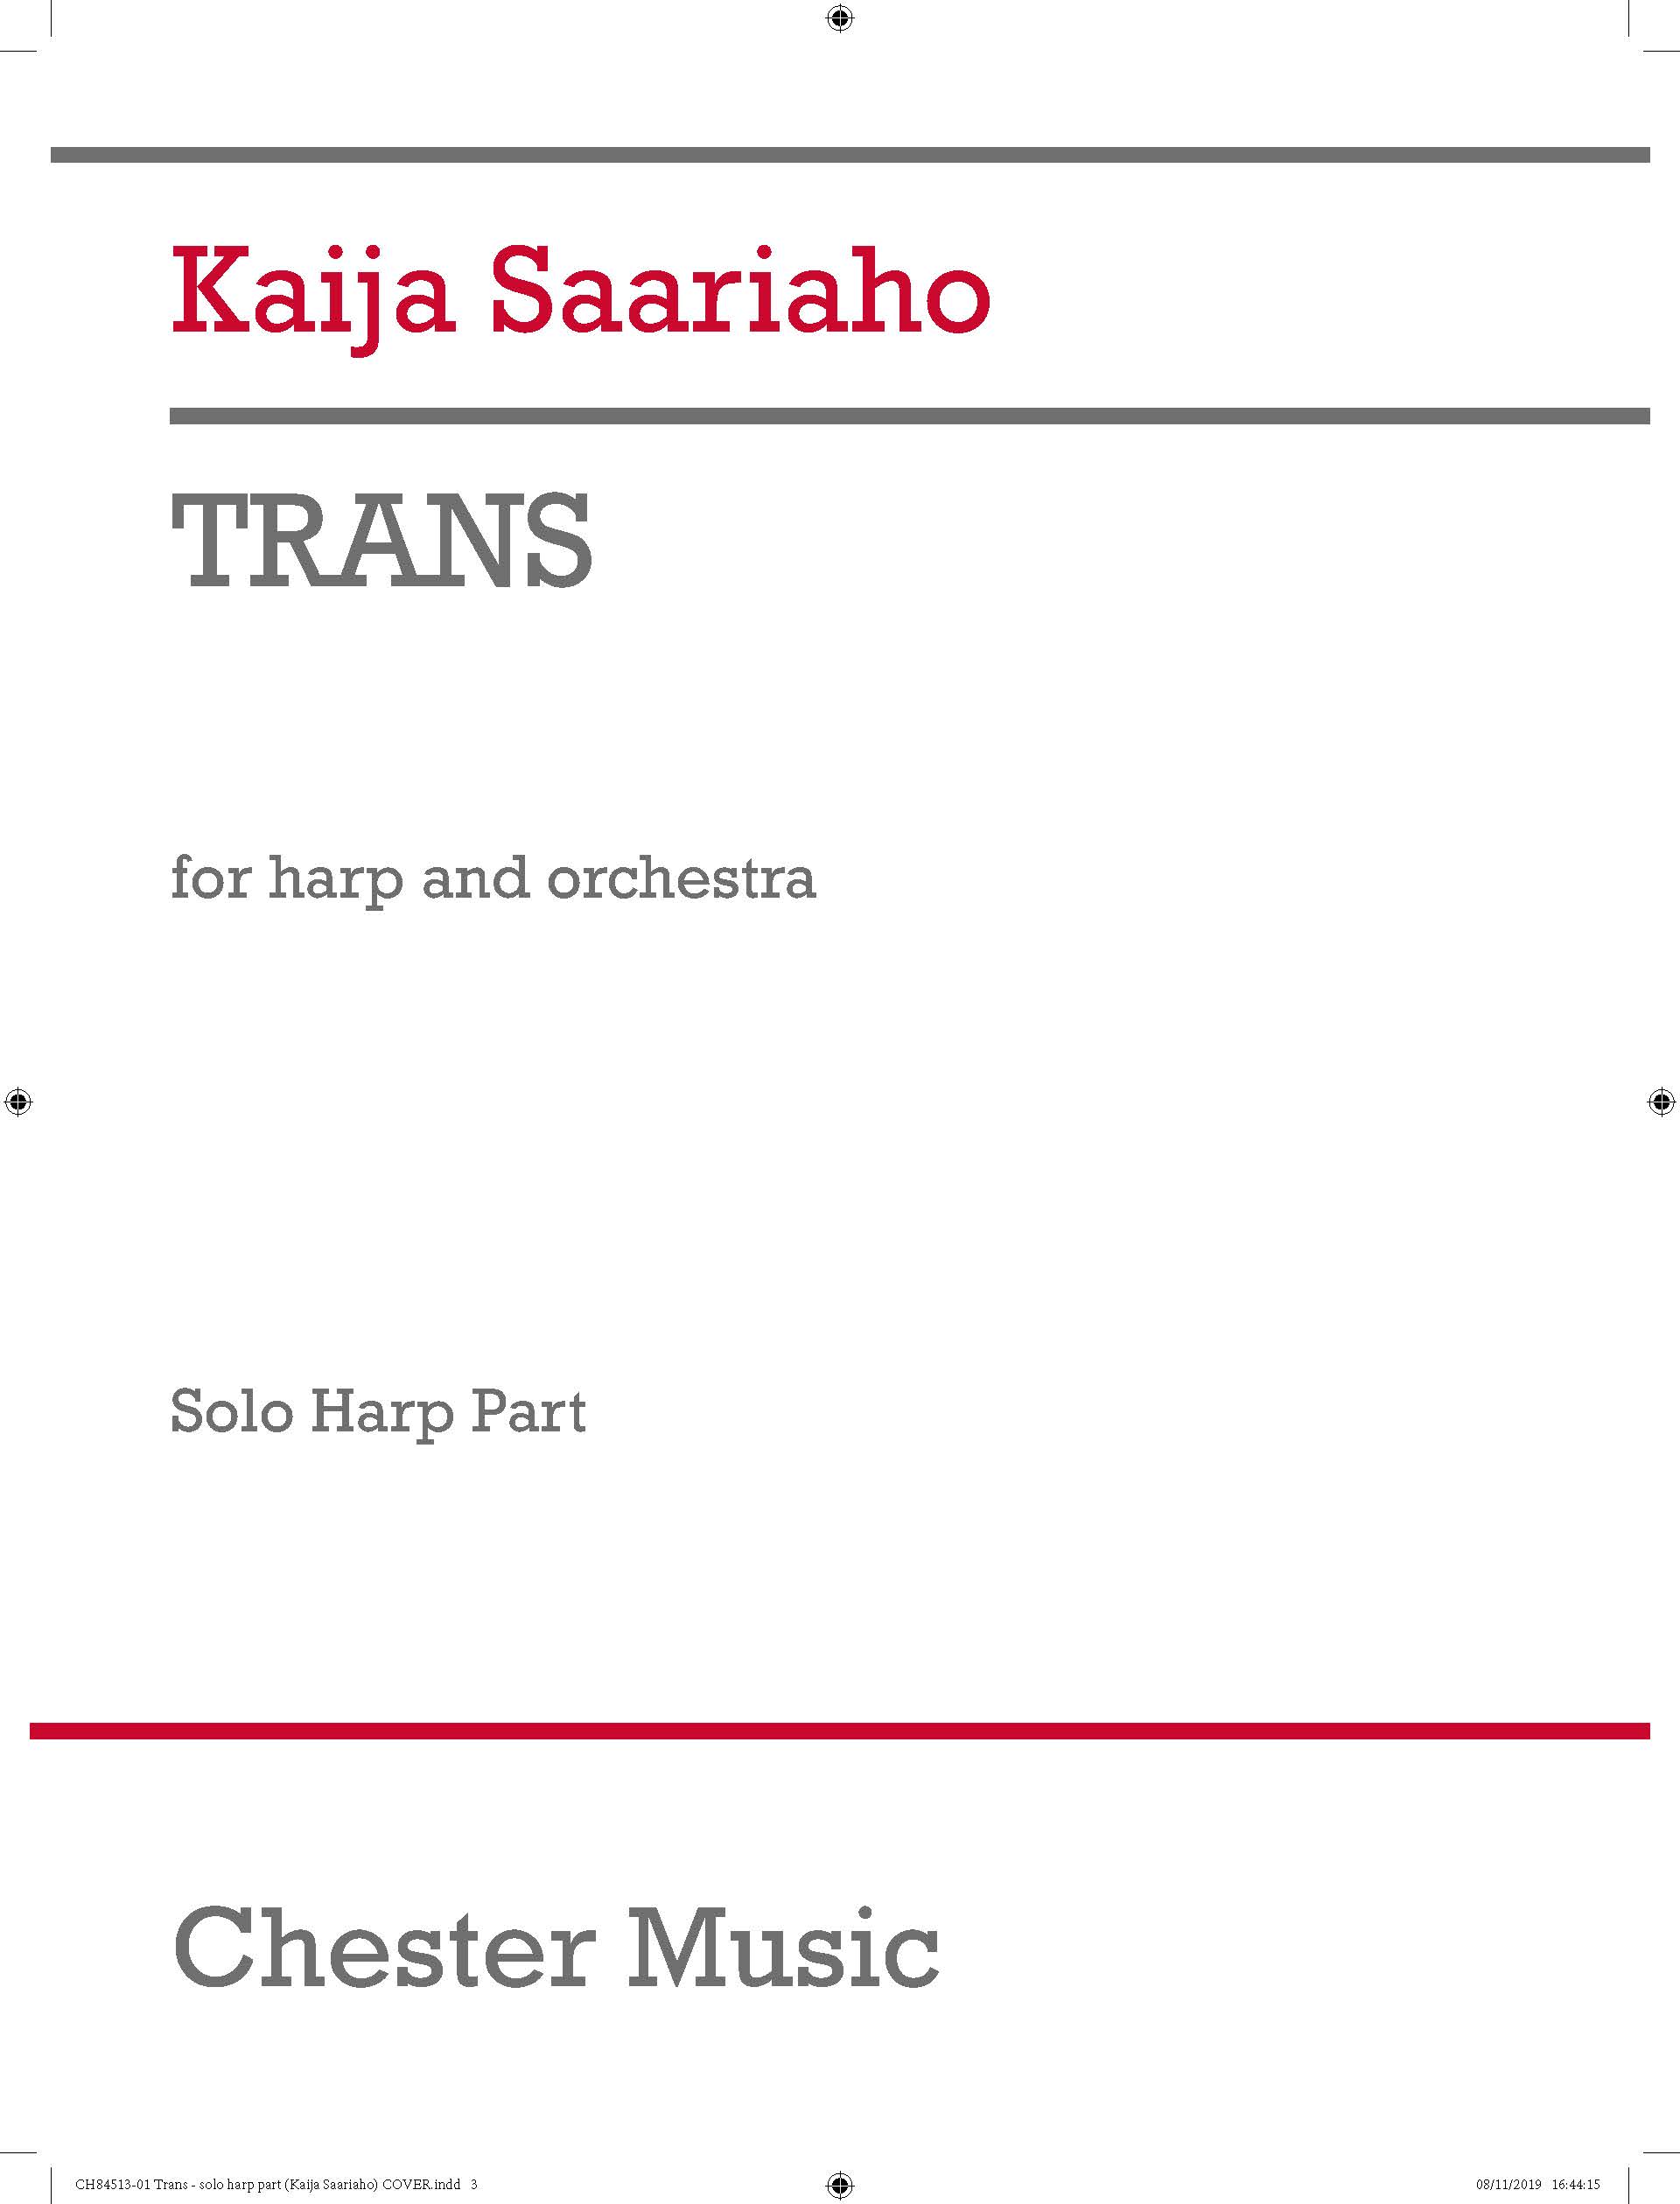 Trans (Solo Harp Part) (SAARIAHO KAIJA)